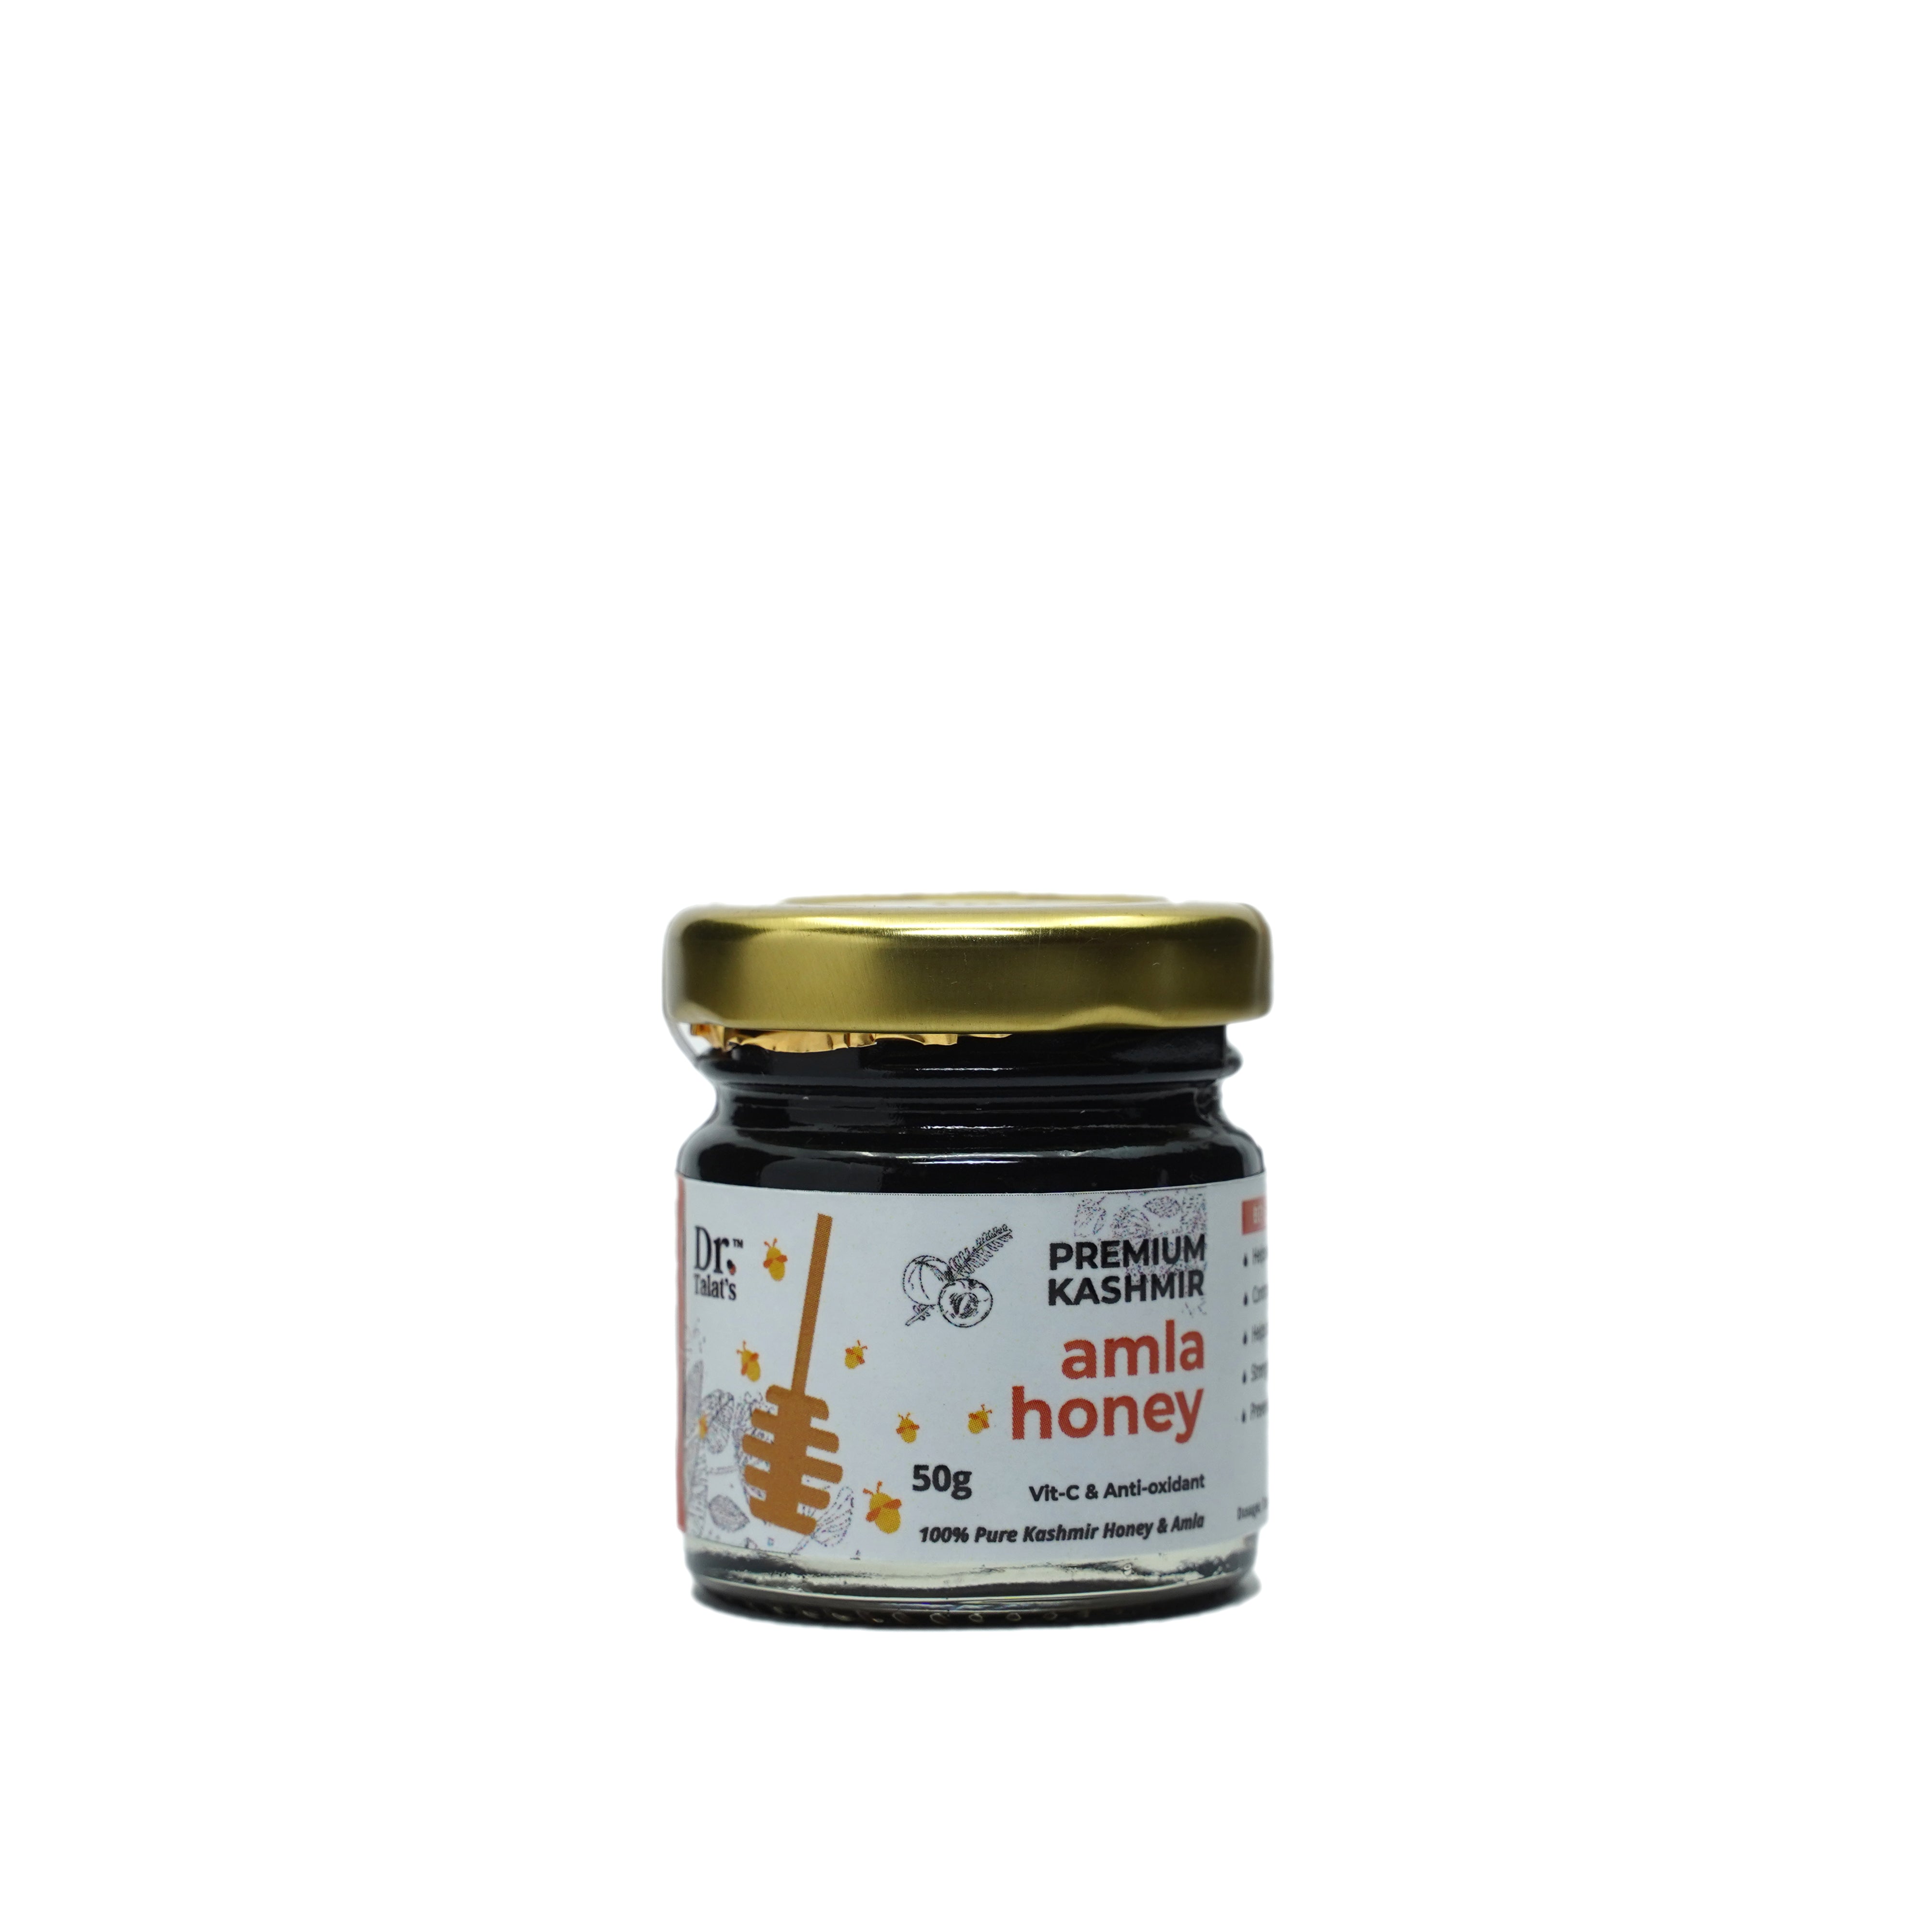 Premium Kashmir amla honey